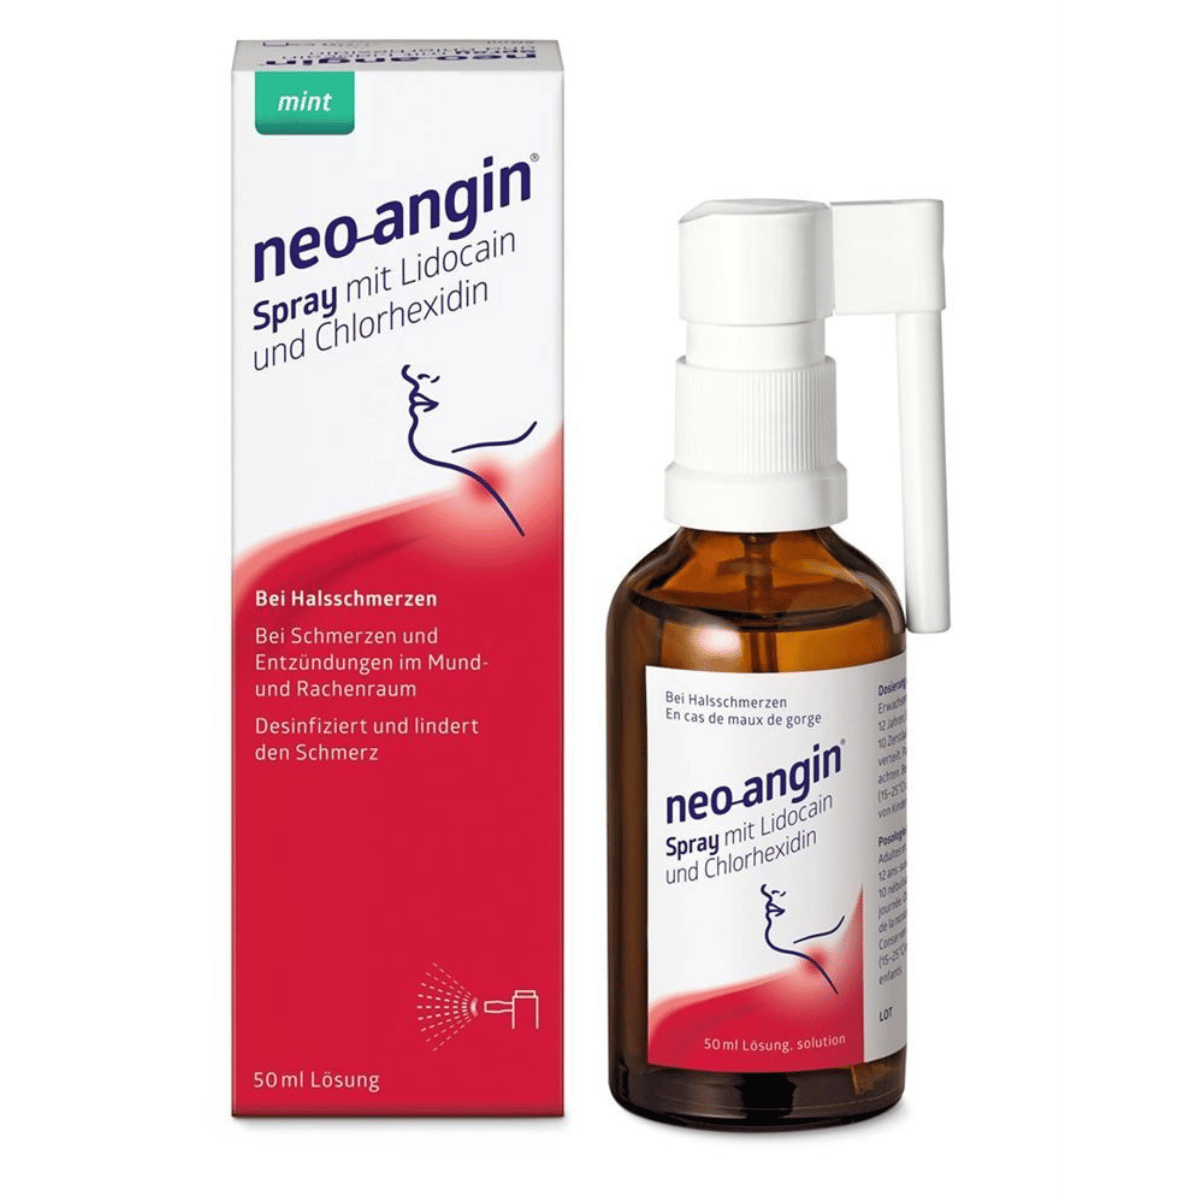 Neo-Angin Spray mit Lidocain Chlorhexidin 50 ml